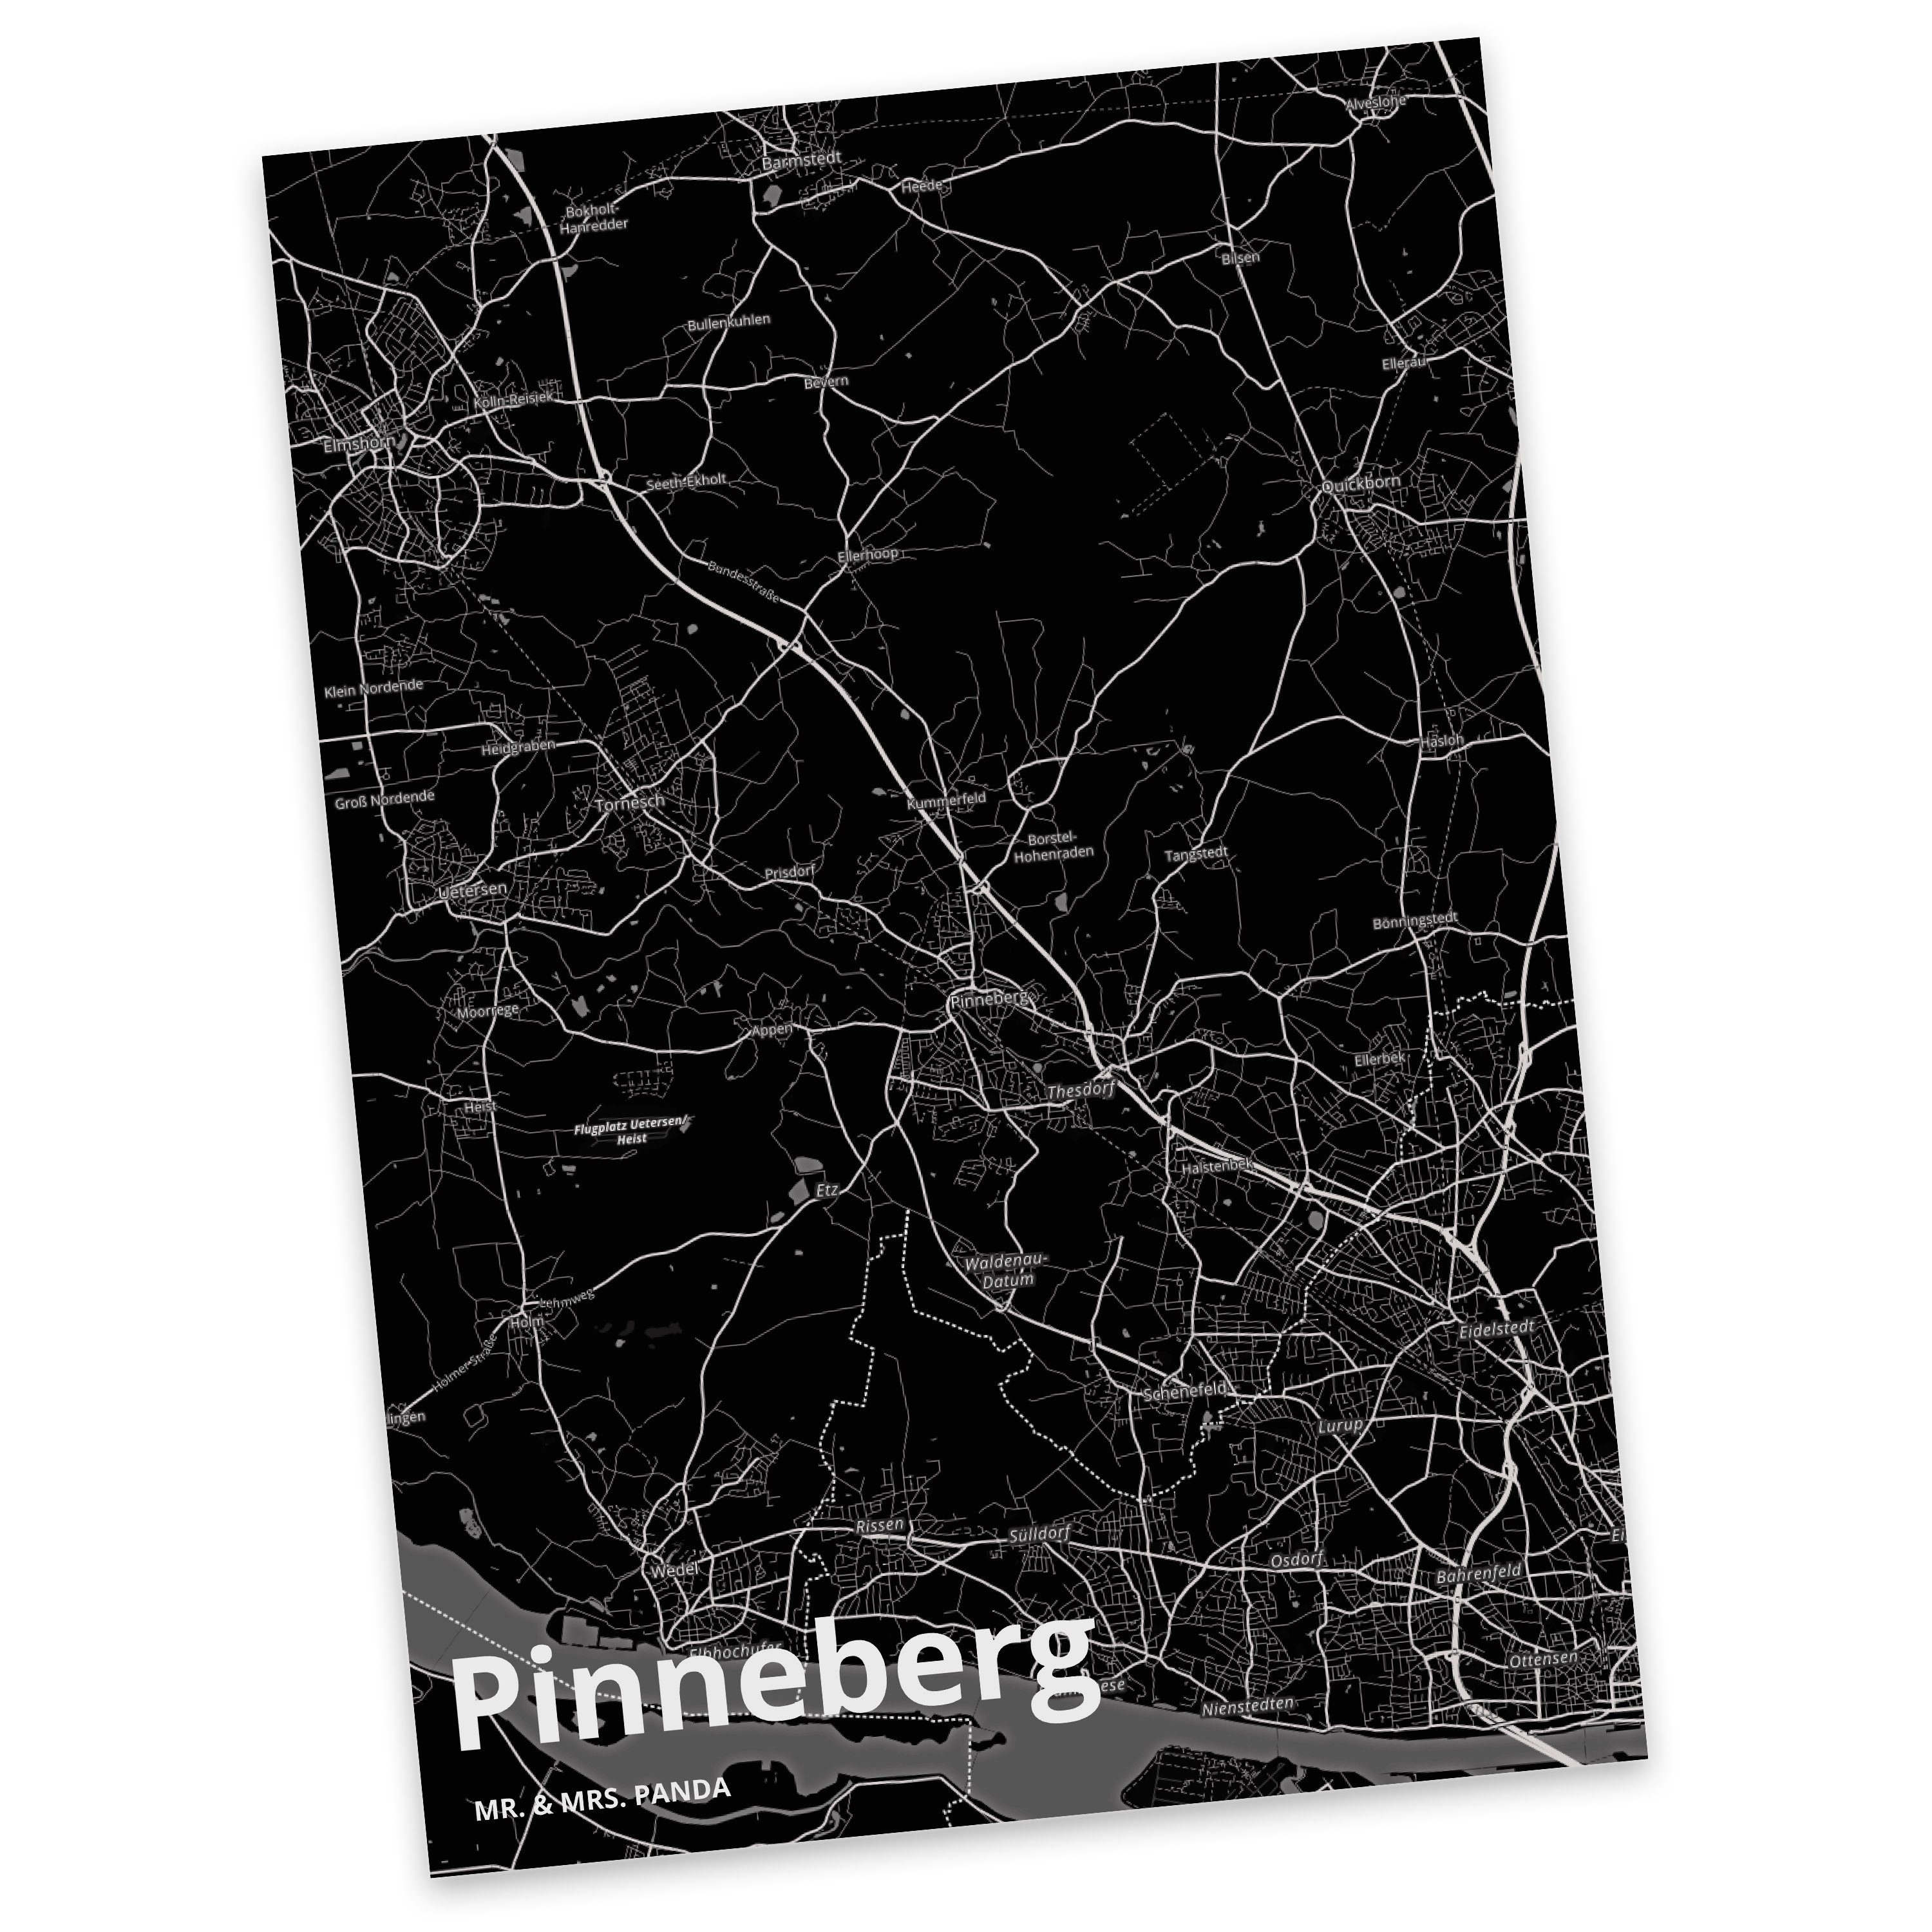 Mr. & Mrs. Panda Postkarte Pinneberg - Geschenk, Einladungskarte, Geschenkkarte, Dorf, Karte, Or | Grußkarten